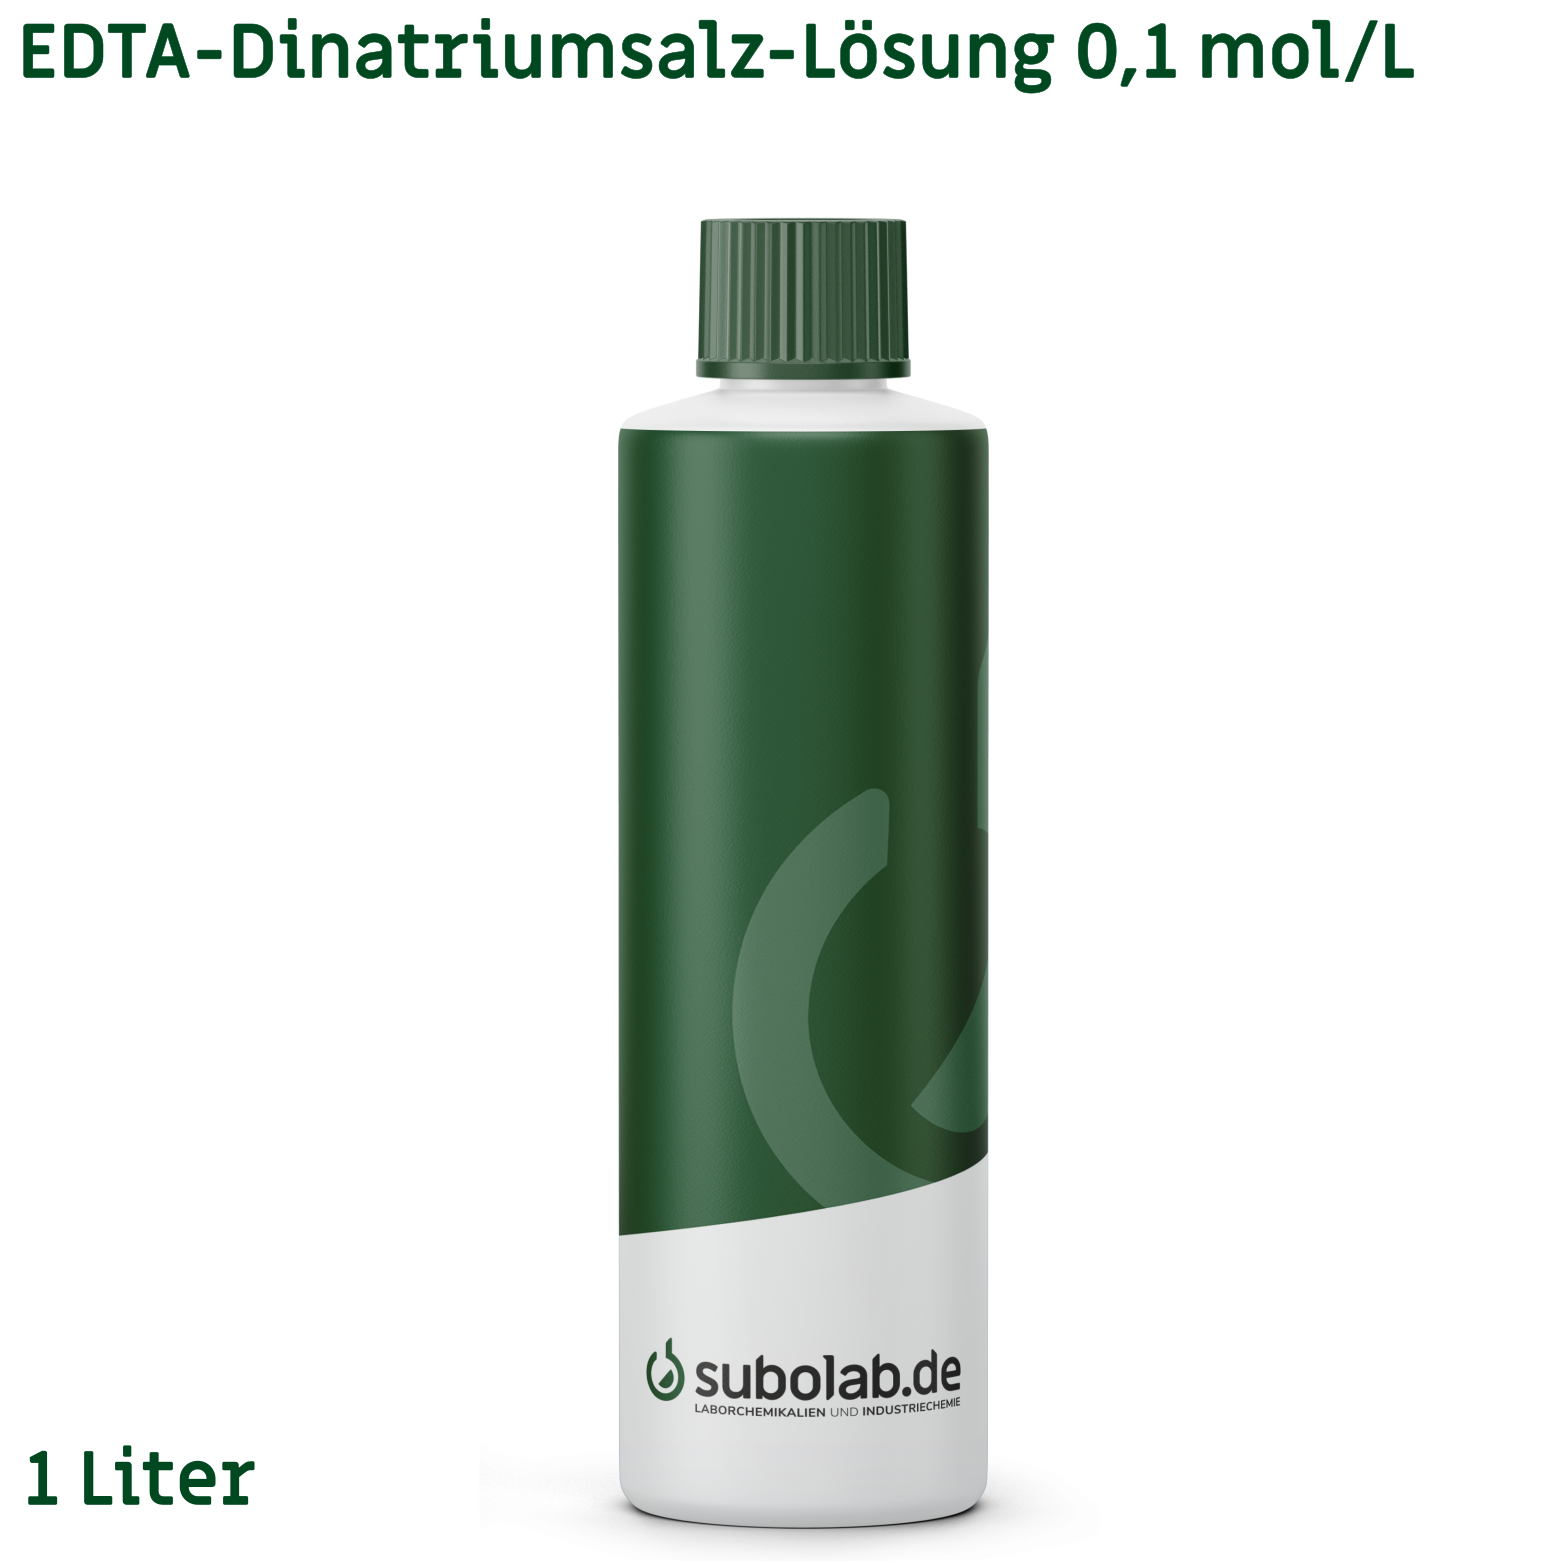 Bild von EDTA - Dinatriumsalz - Lösung 0,1 mol/L (1 Liter)